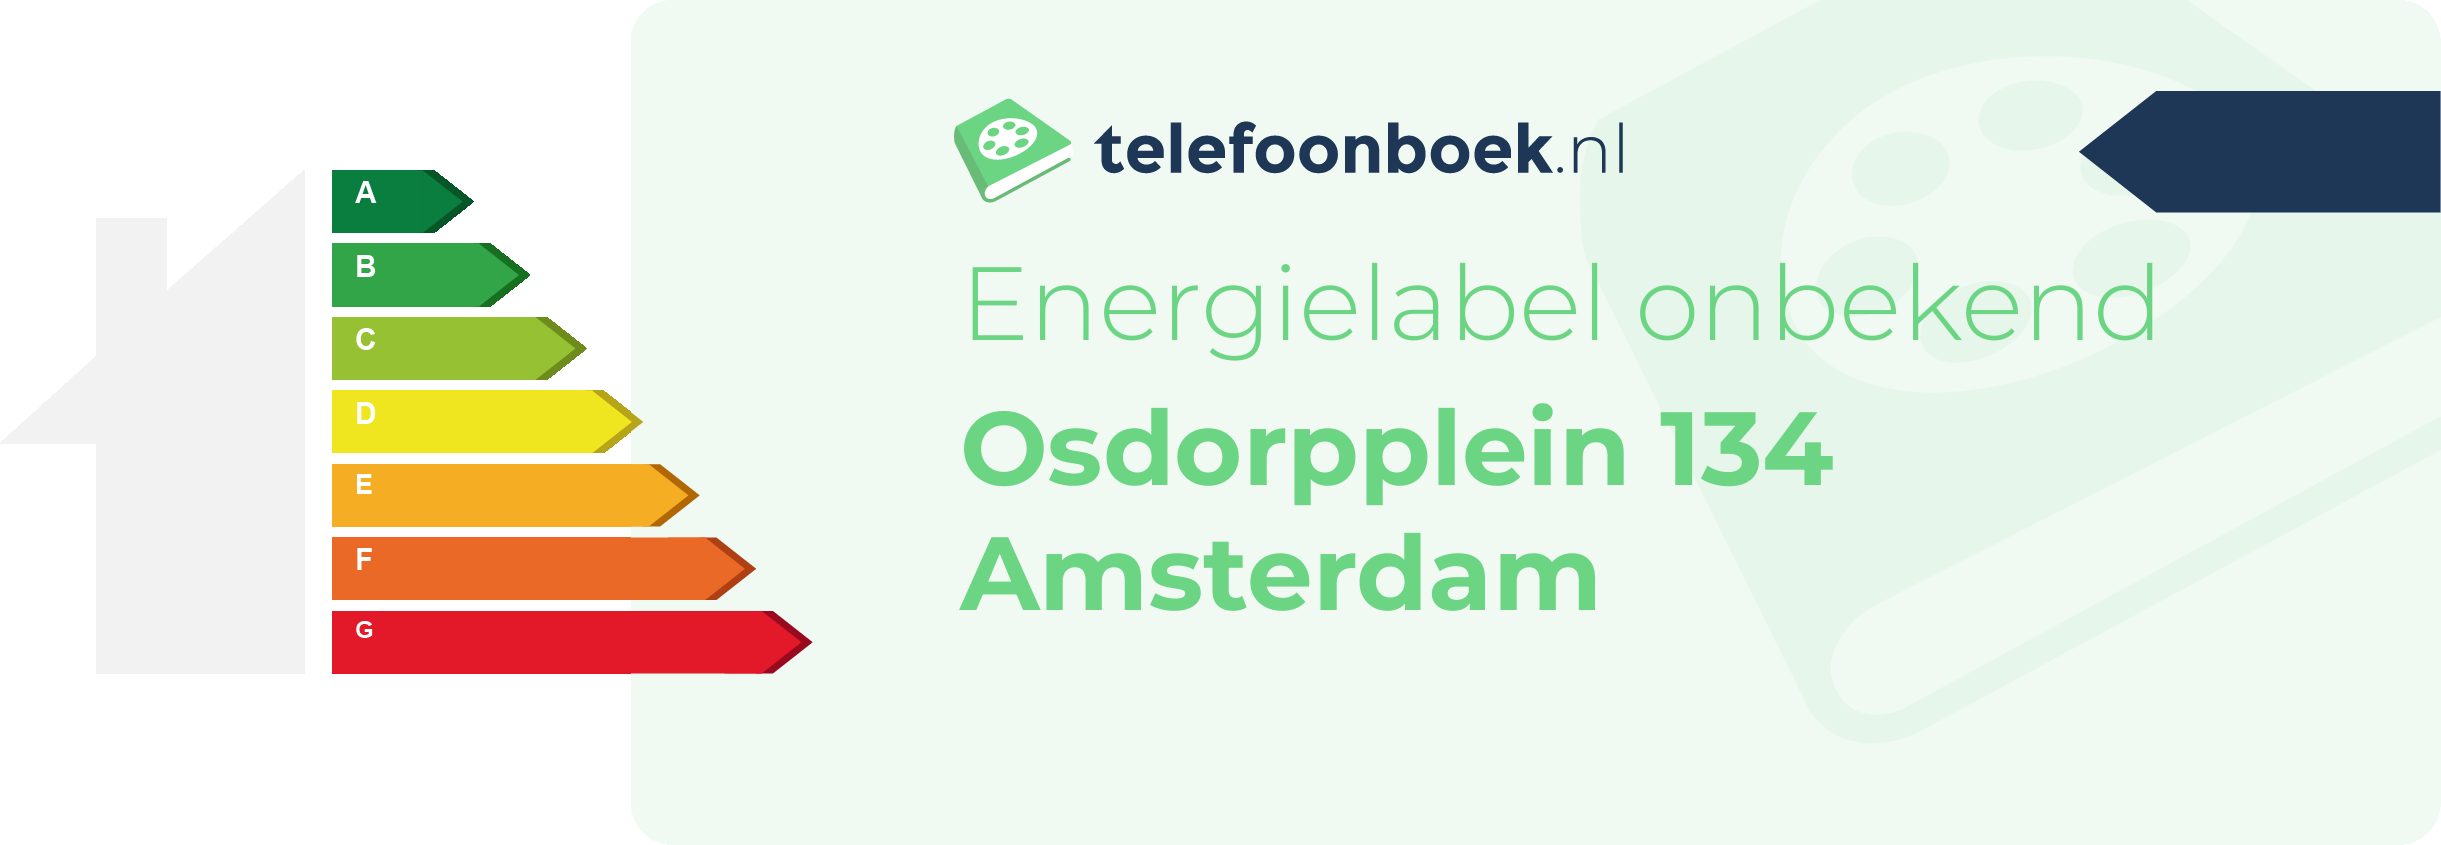 Energielabel Osdorpplein 134 Amsterdam